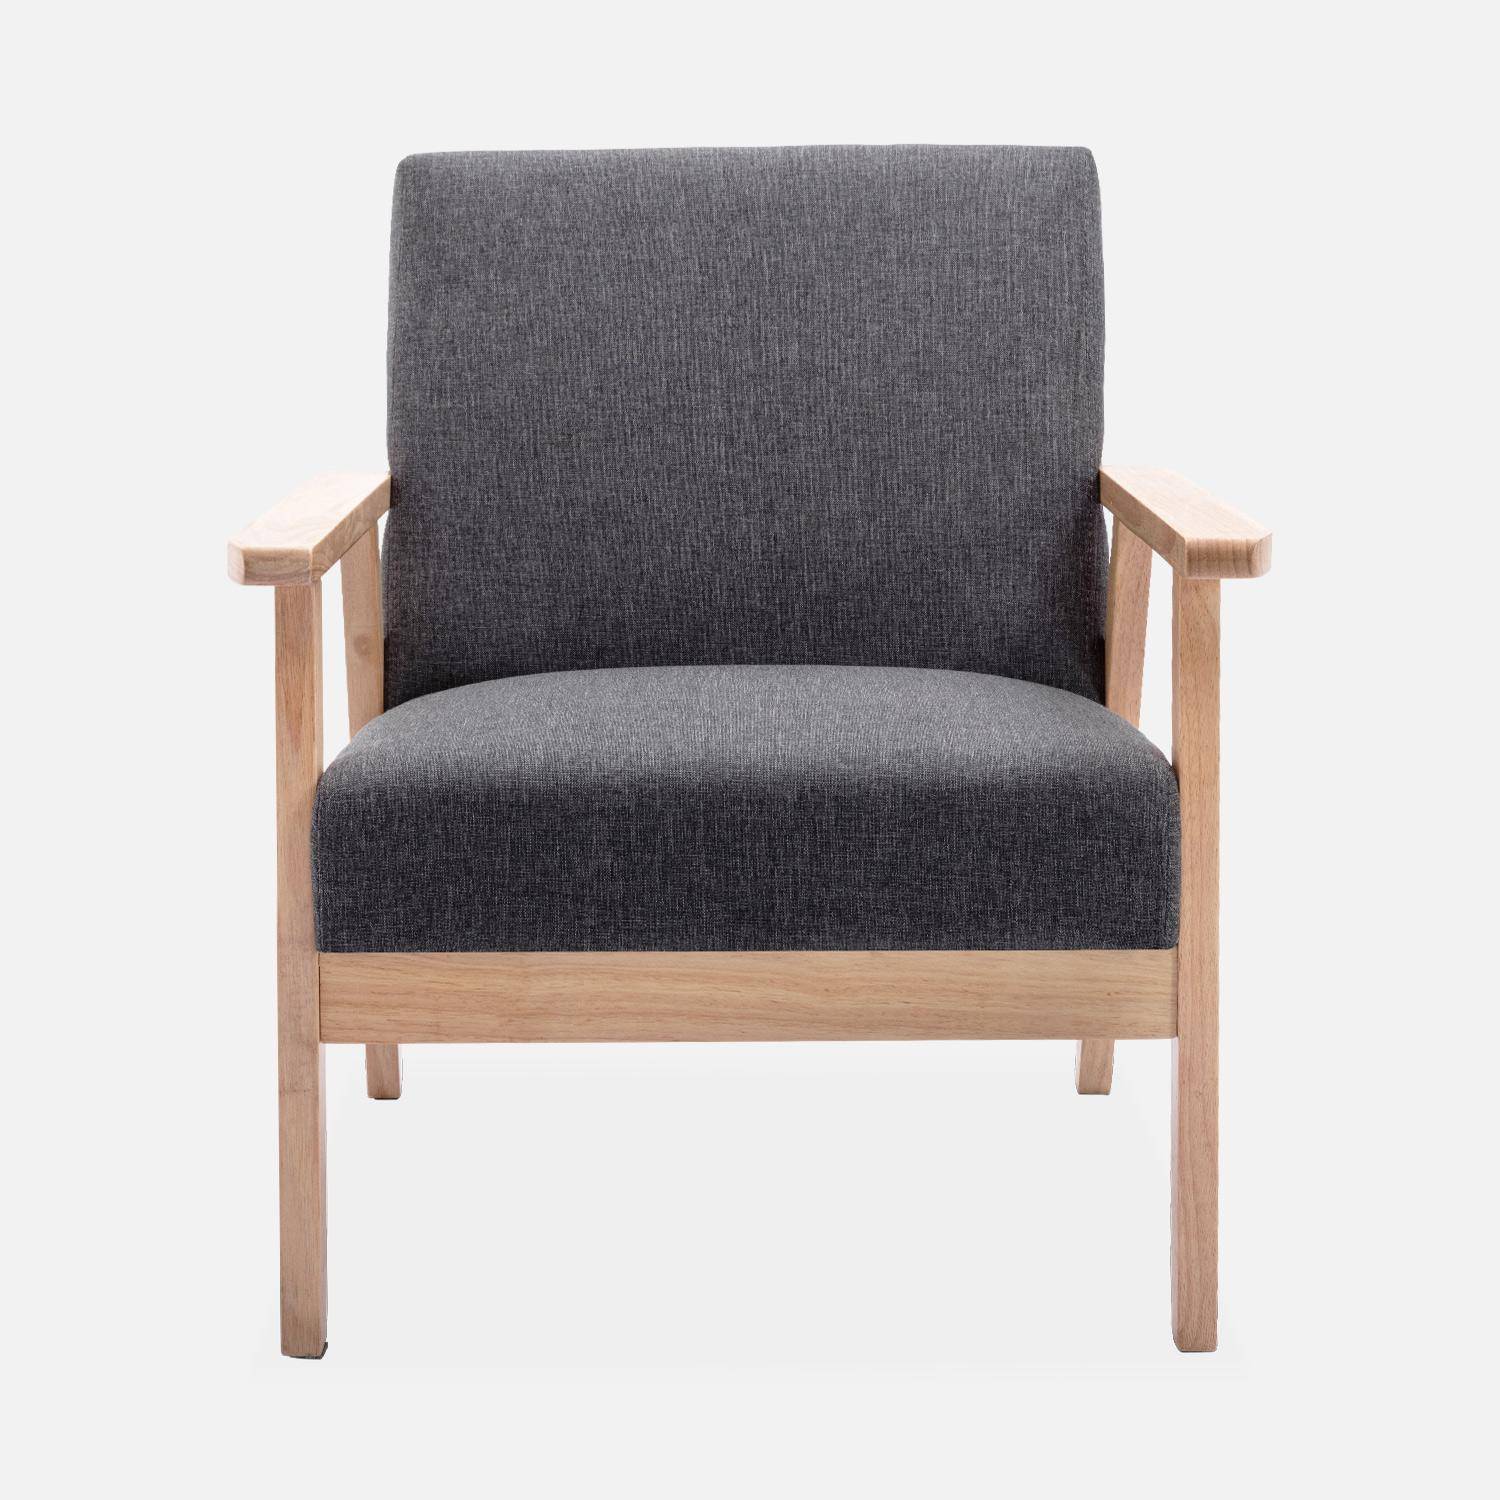 Banco y sillón de madera y tela gris oscuro, Isak, L 114 x A 69,5 x A 73 cm,sweeek,Photo4